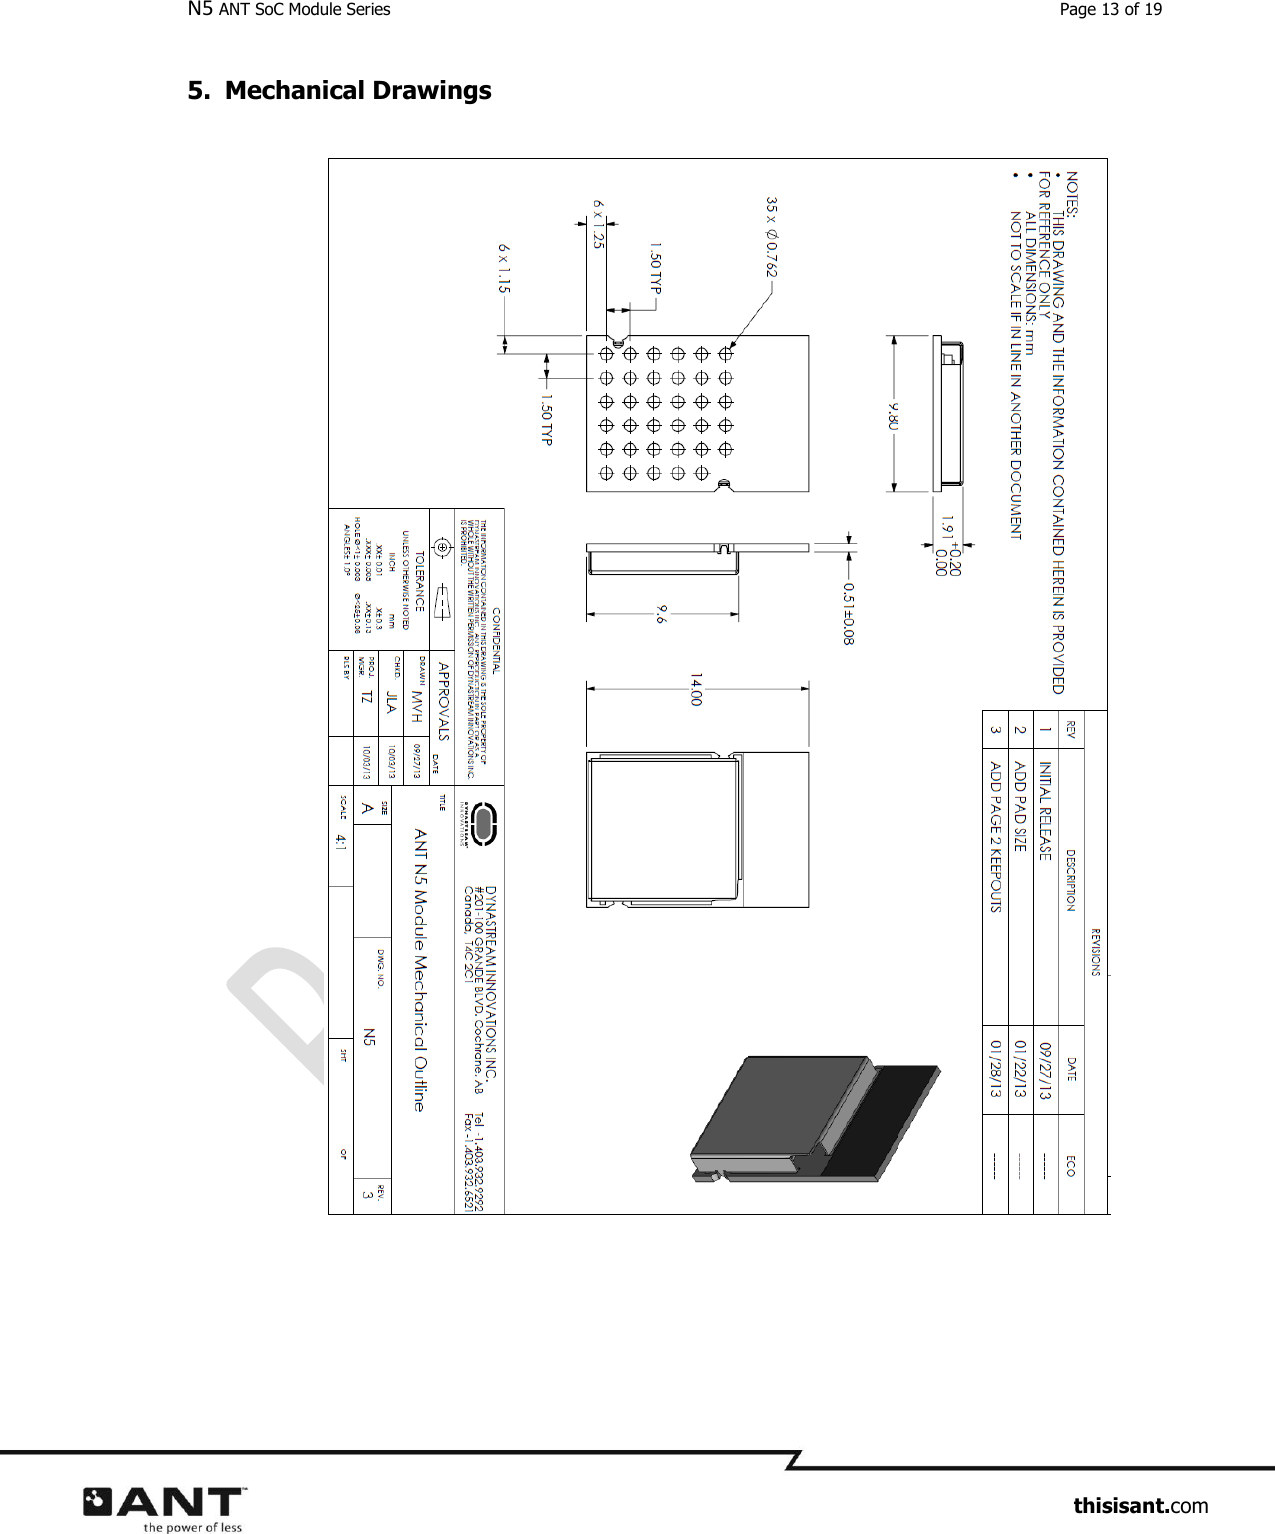 N5 ANT SoC Module Series  Page 13 of 19                     thisisant.com 5. Mechanical Drawings      